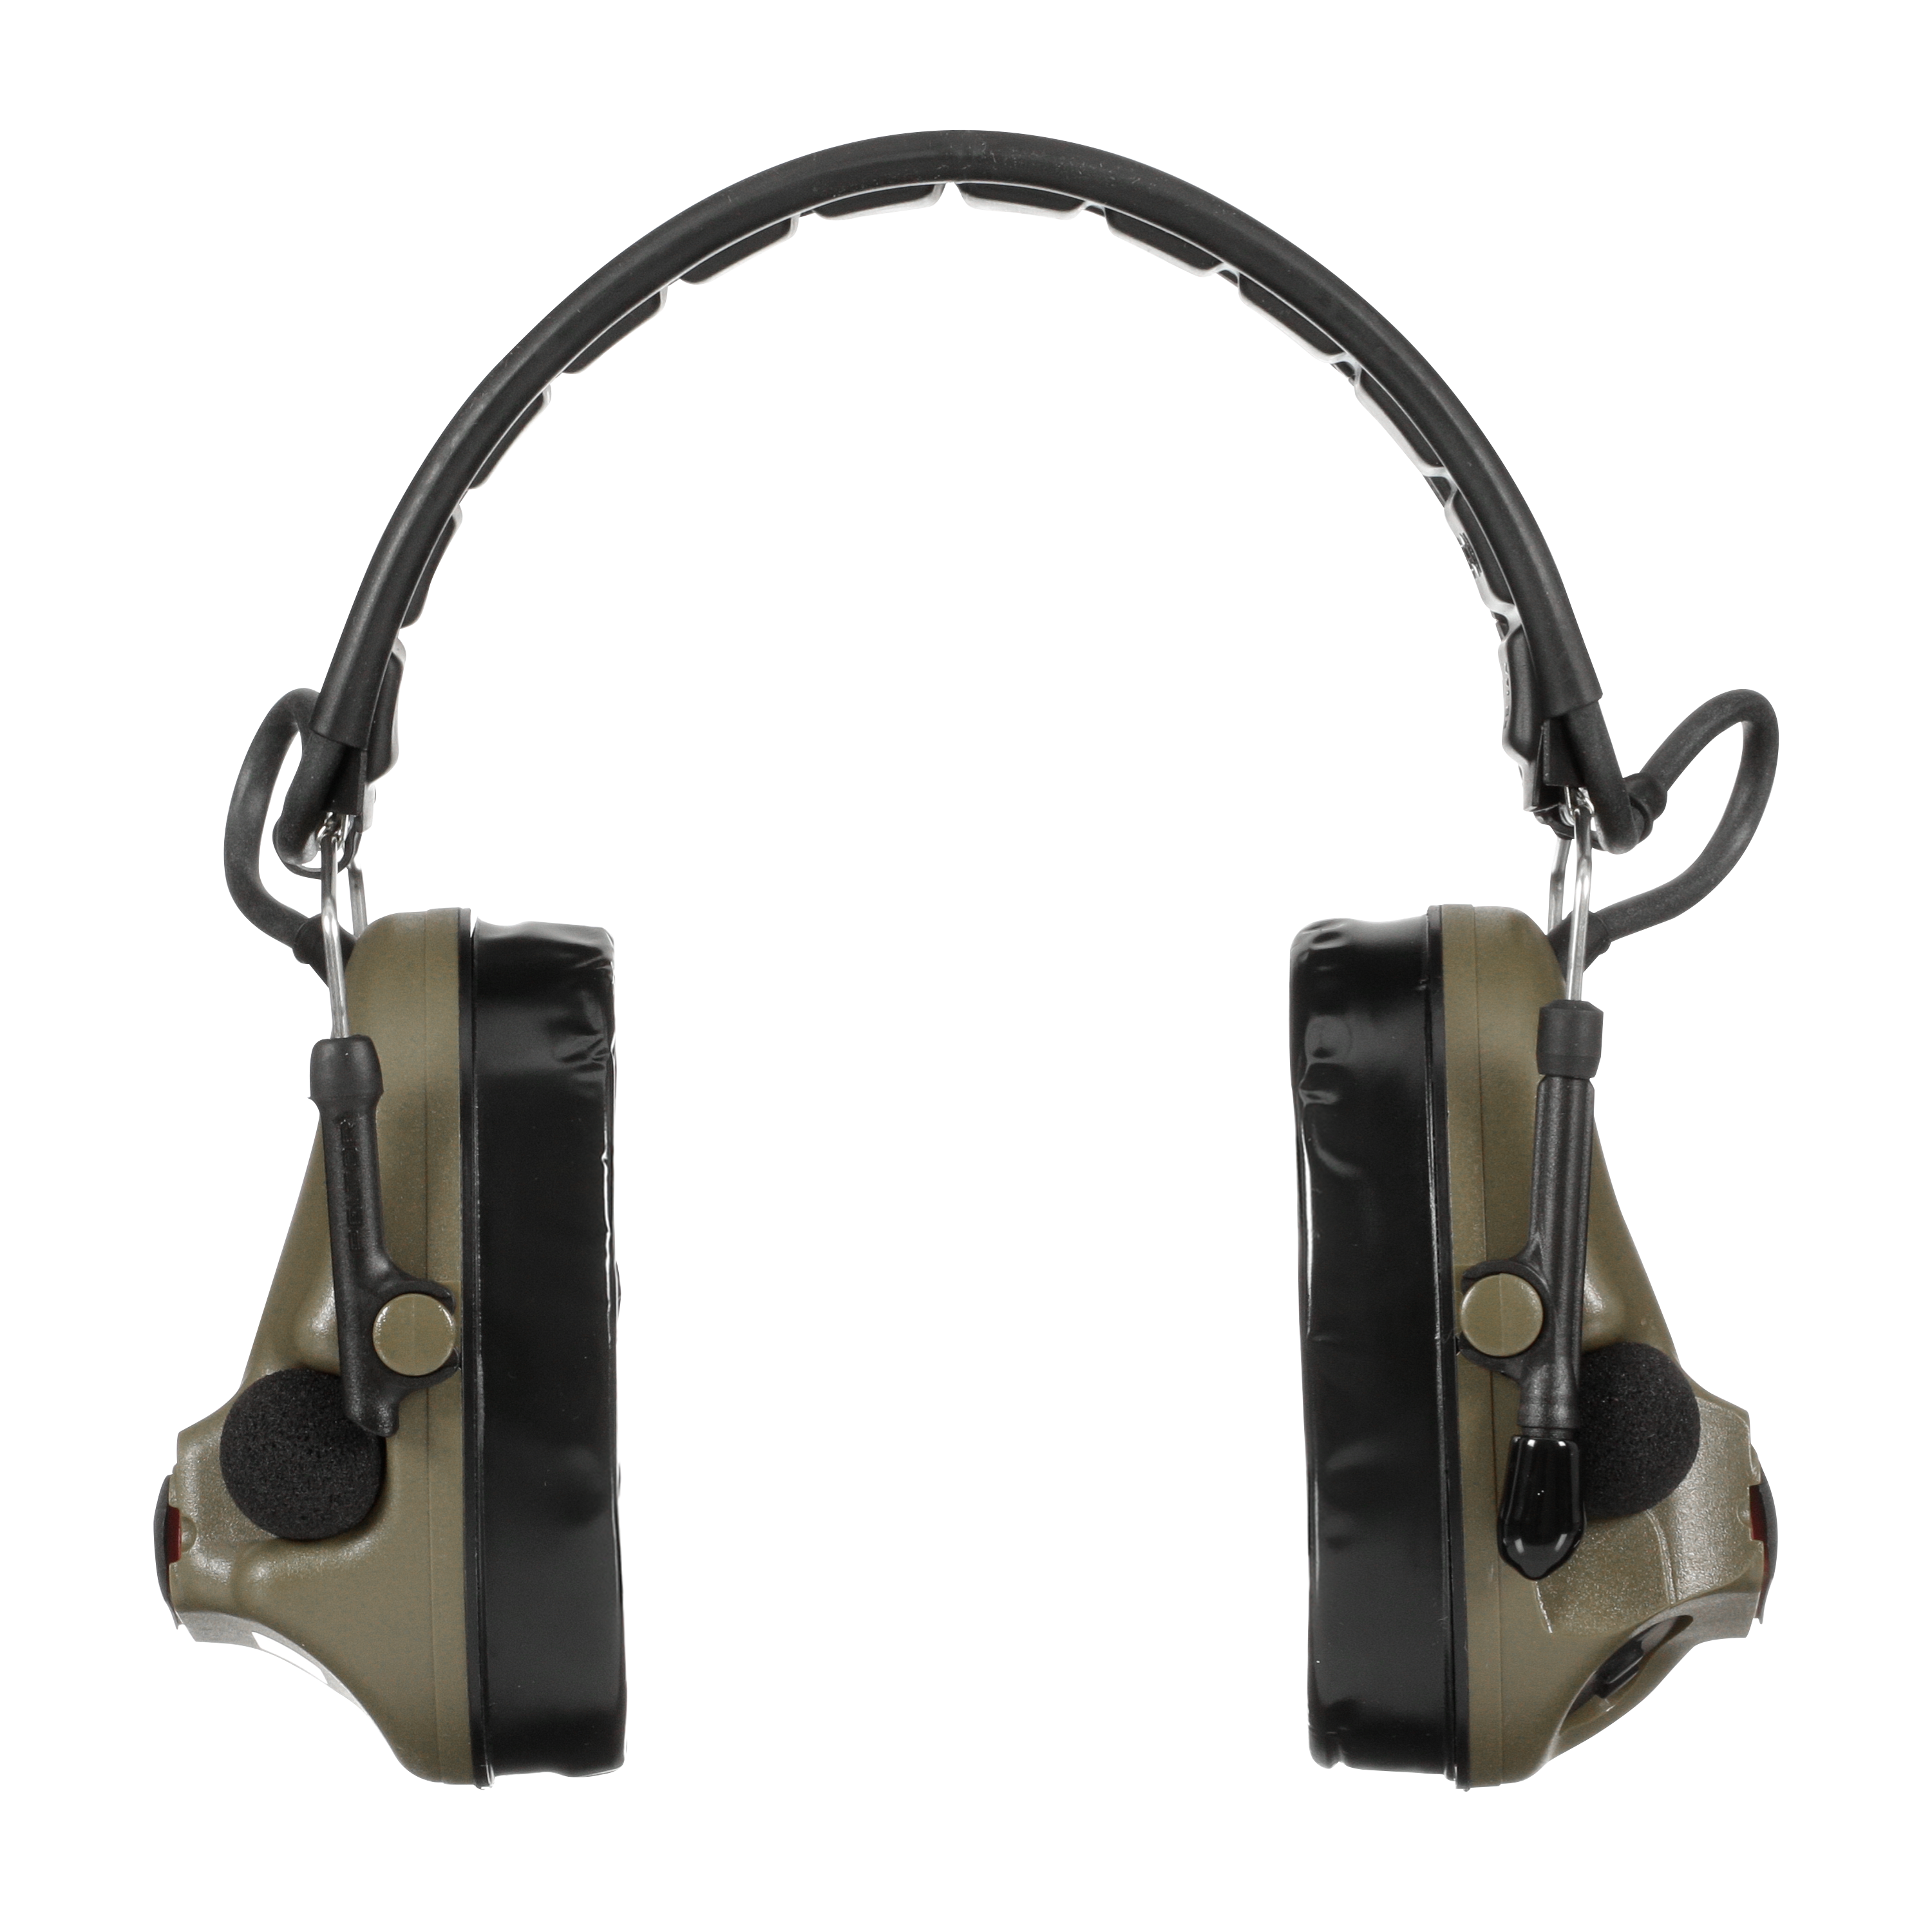 3M PELTOR ComTac V Hearing Defender Headset MT20H682FB-09 GN, opvouwbaar, groen